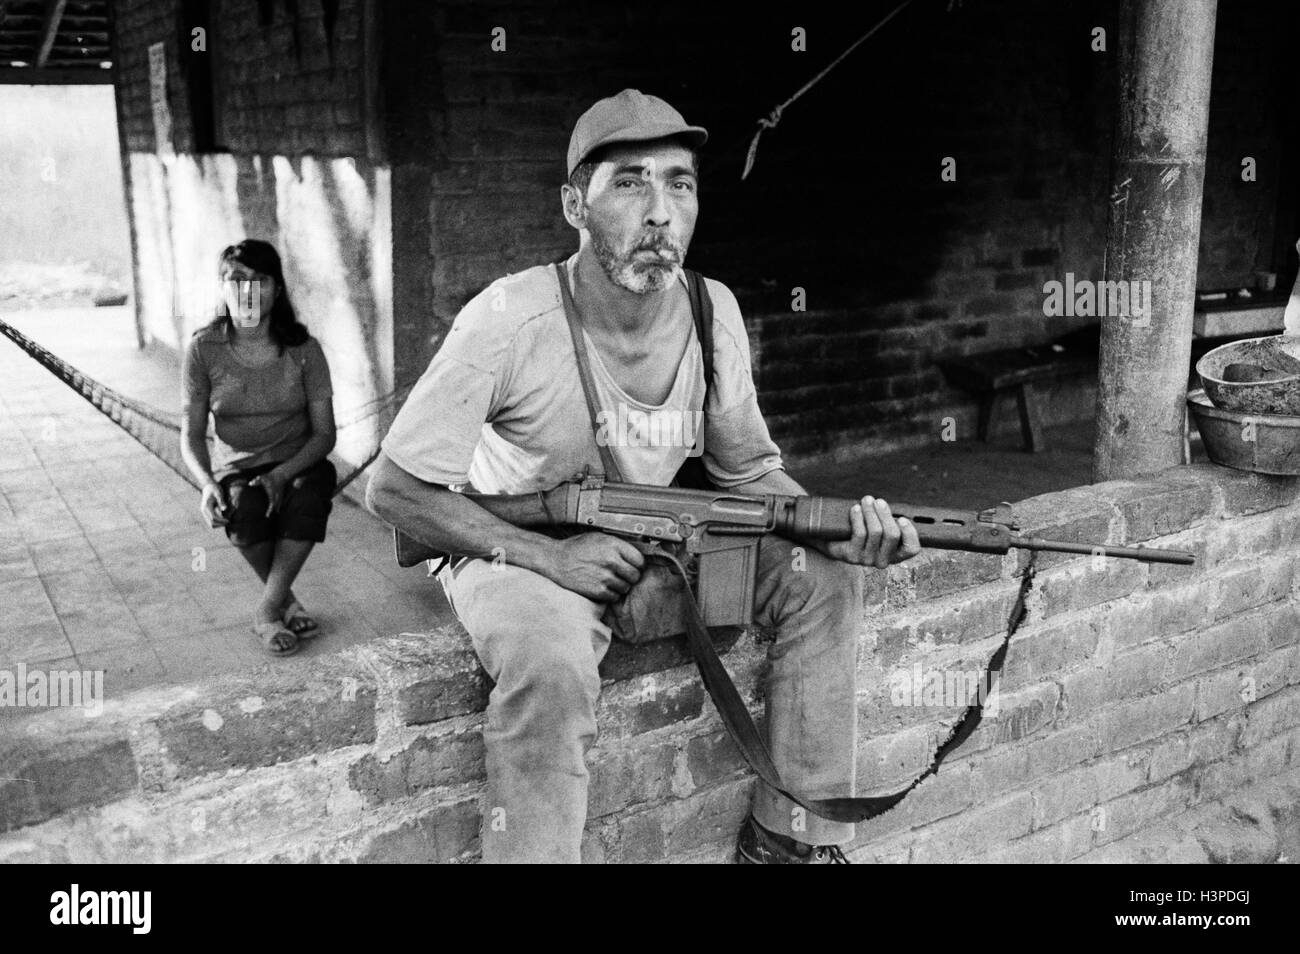 CHALATENANGO, EL SALVADOR, FEB 1984: - innerhalb der FPL Guerilla Zonen der Steuerung Mitglied der PPL-Miliz. Stockfoto